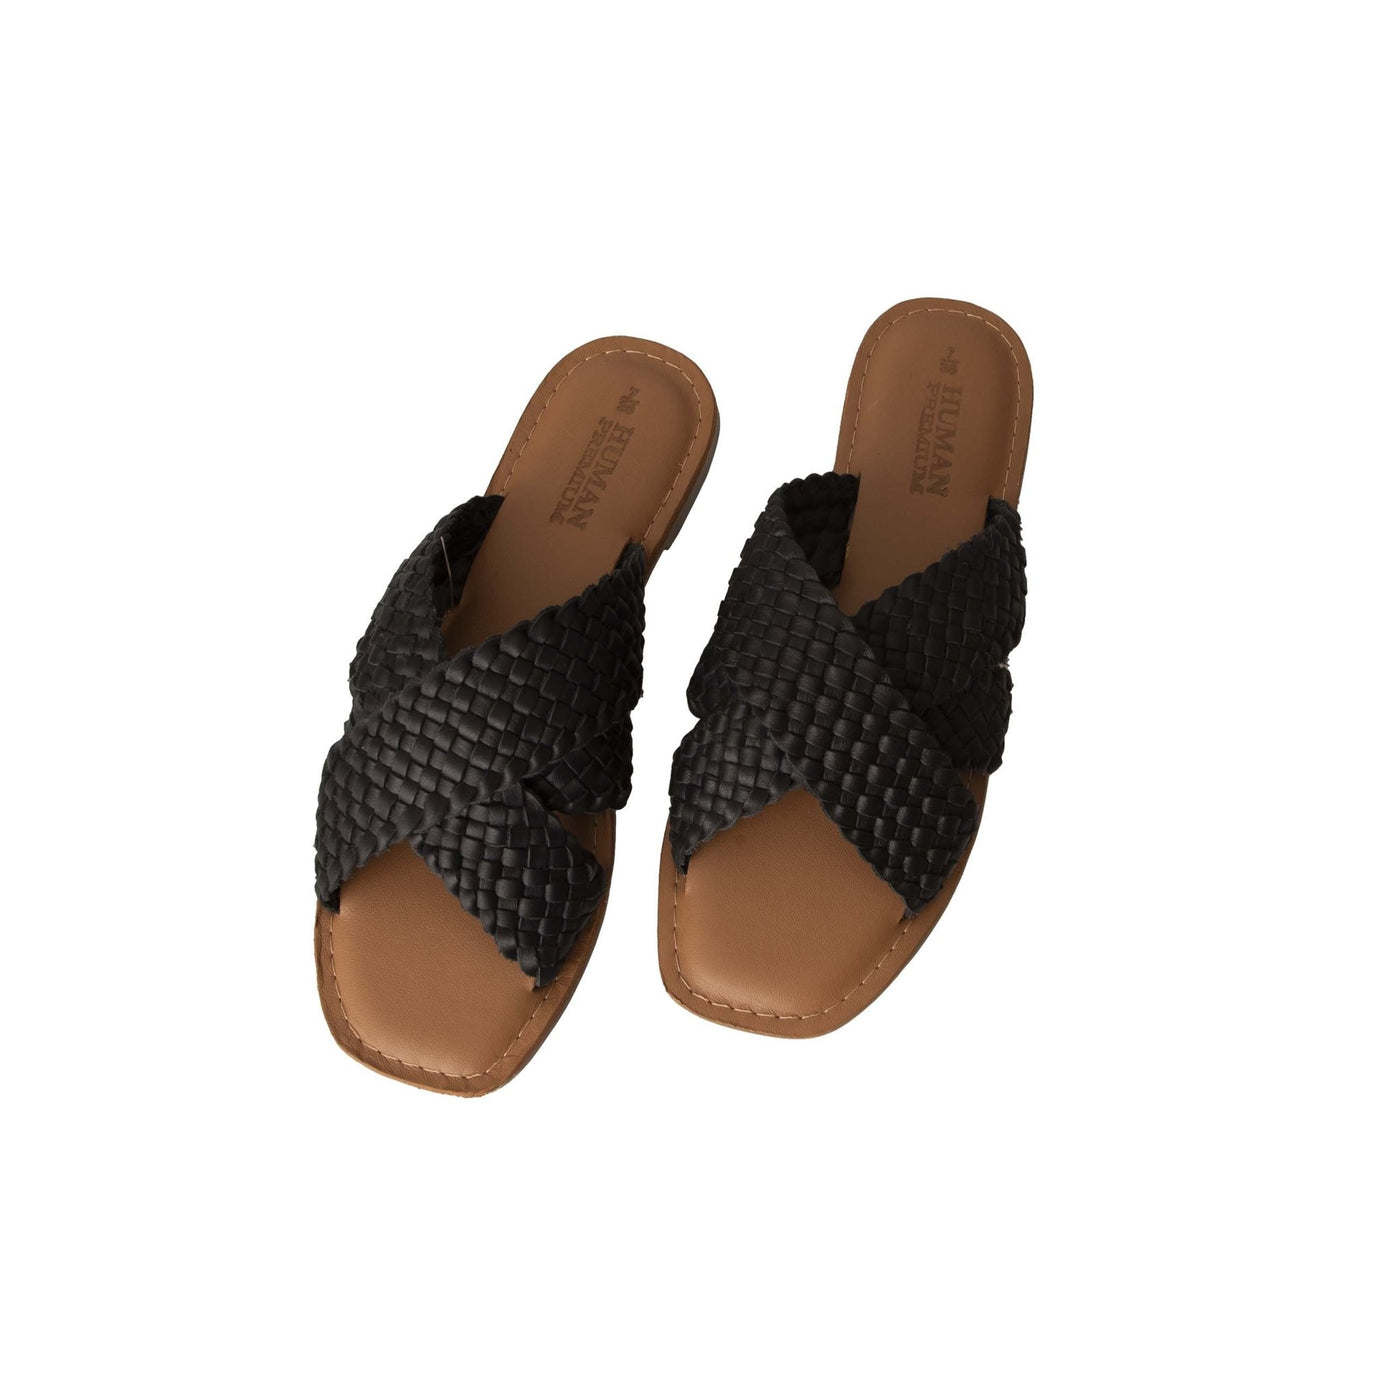 Human Shoes Envy Leather Slide in Black Weave - Hey Sara